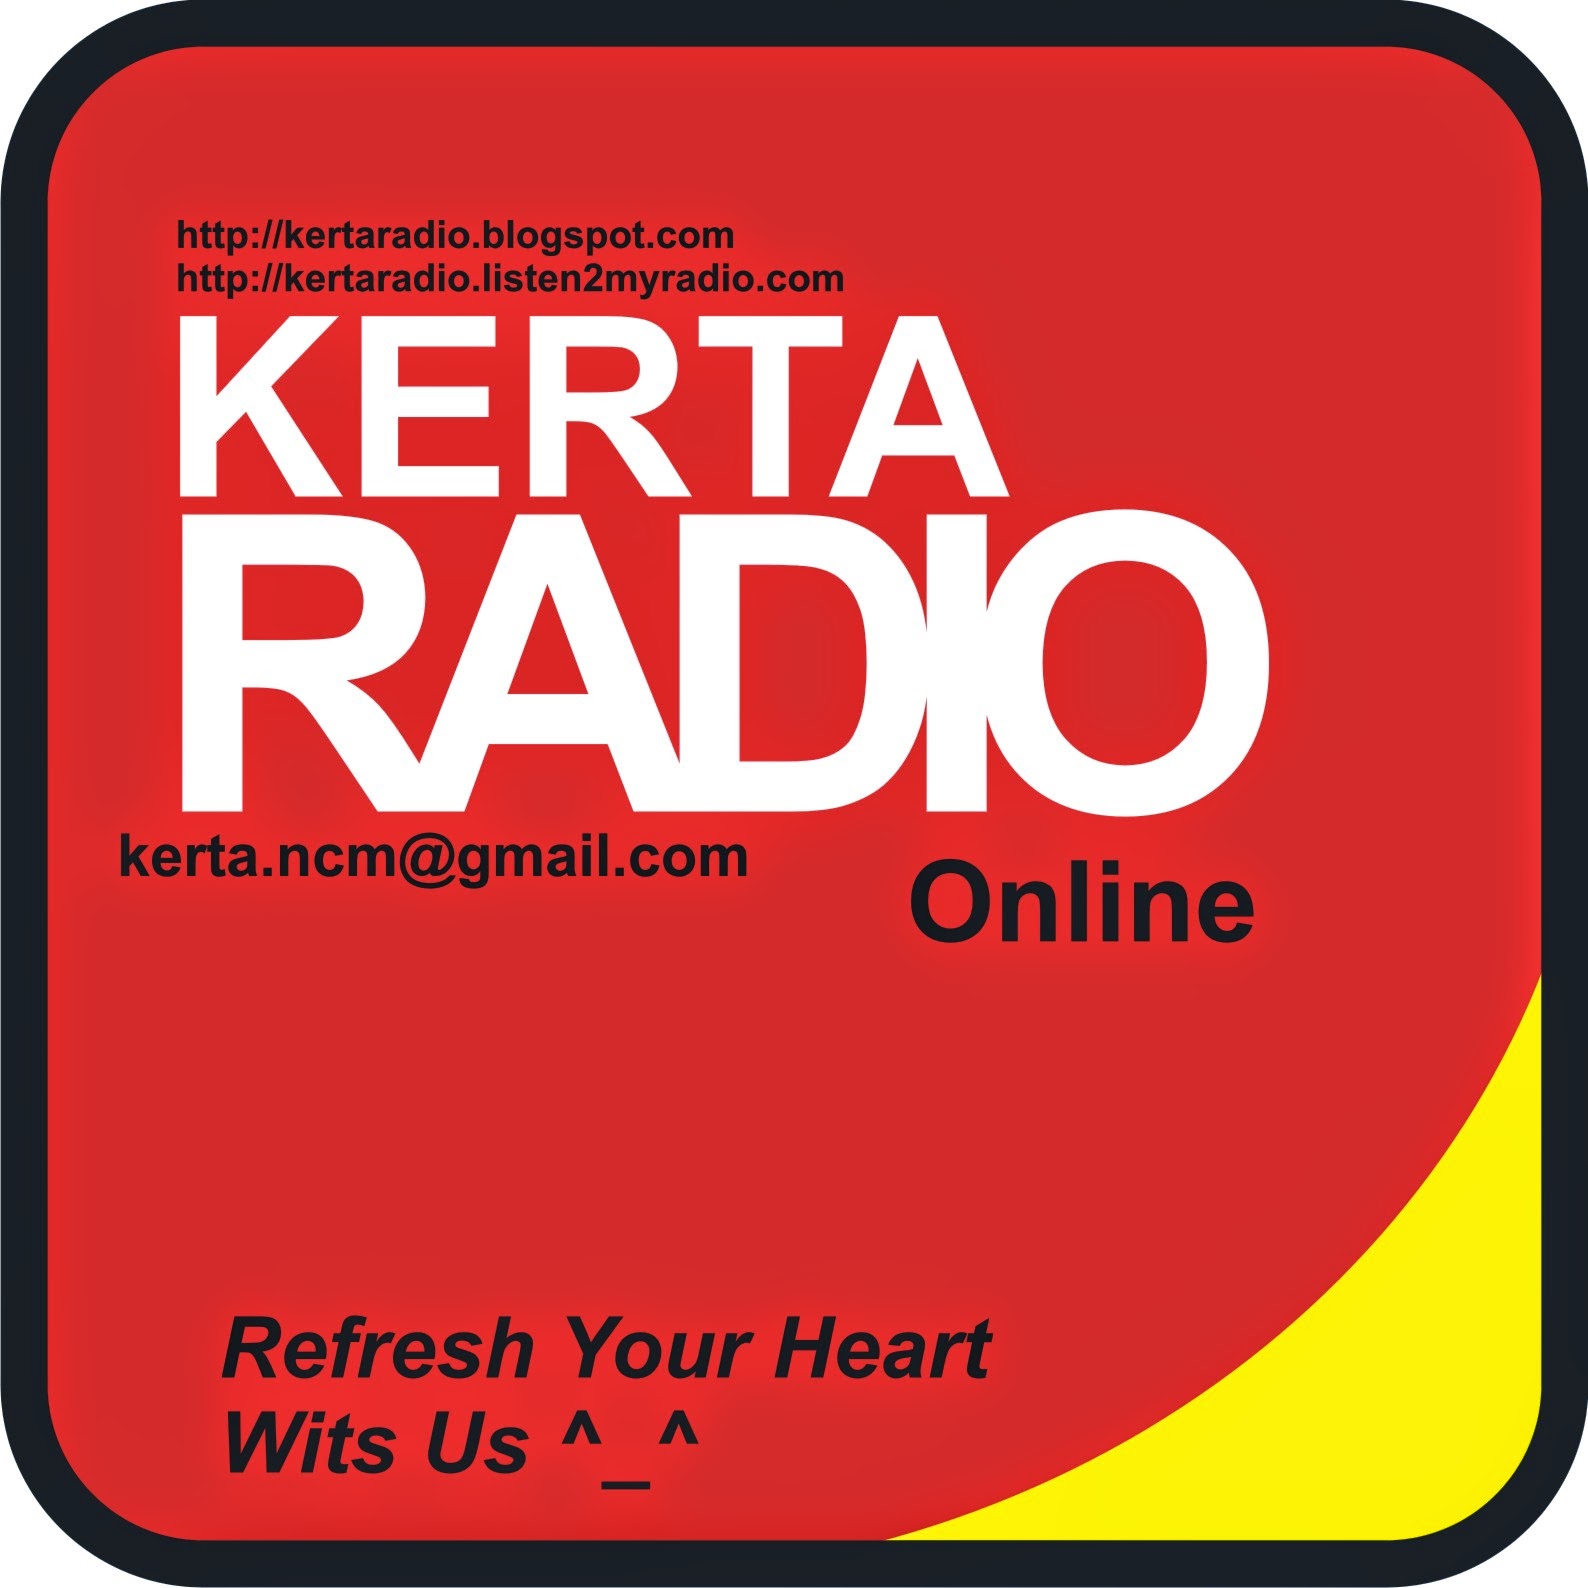 KERTA RADIO ONLINE